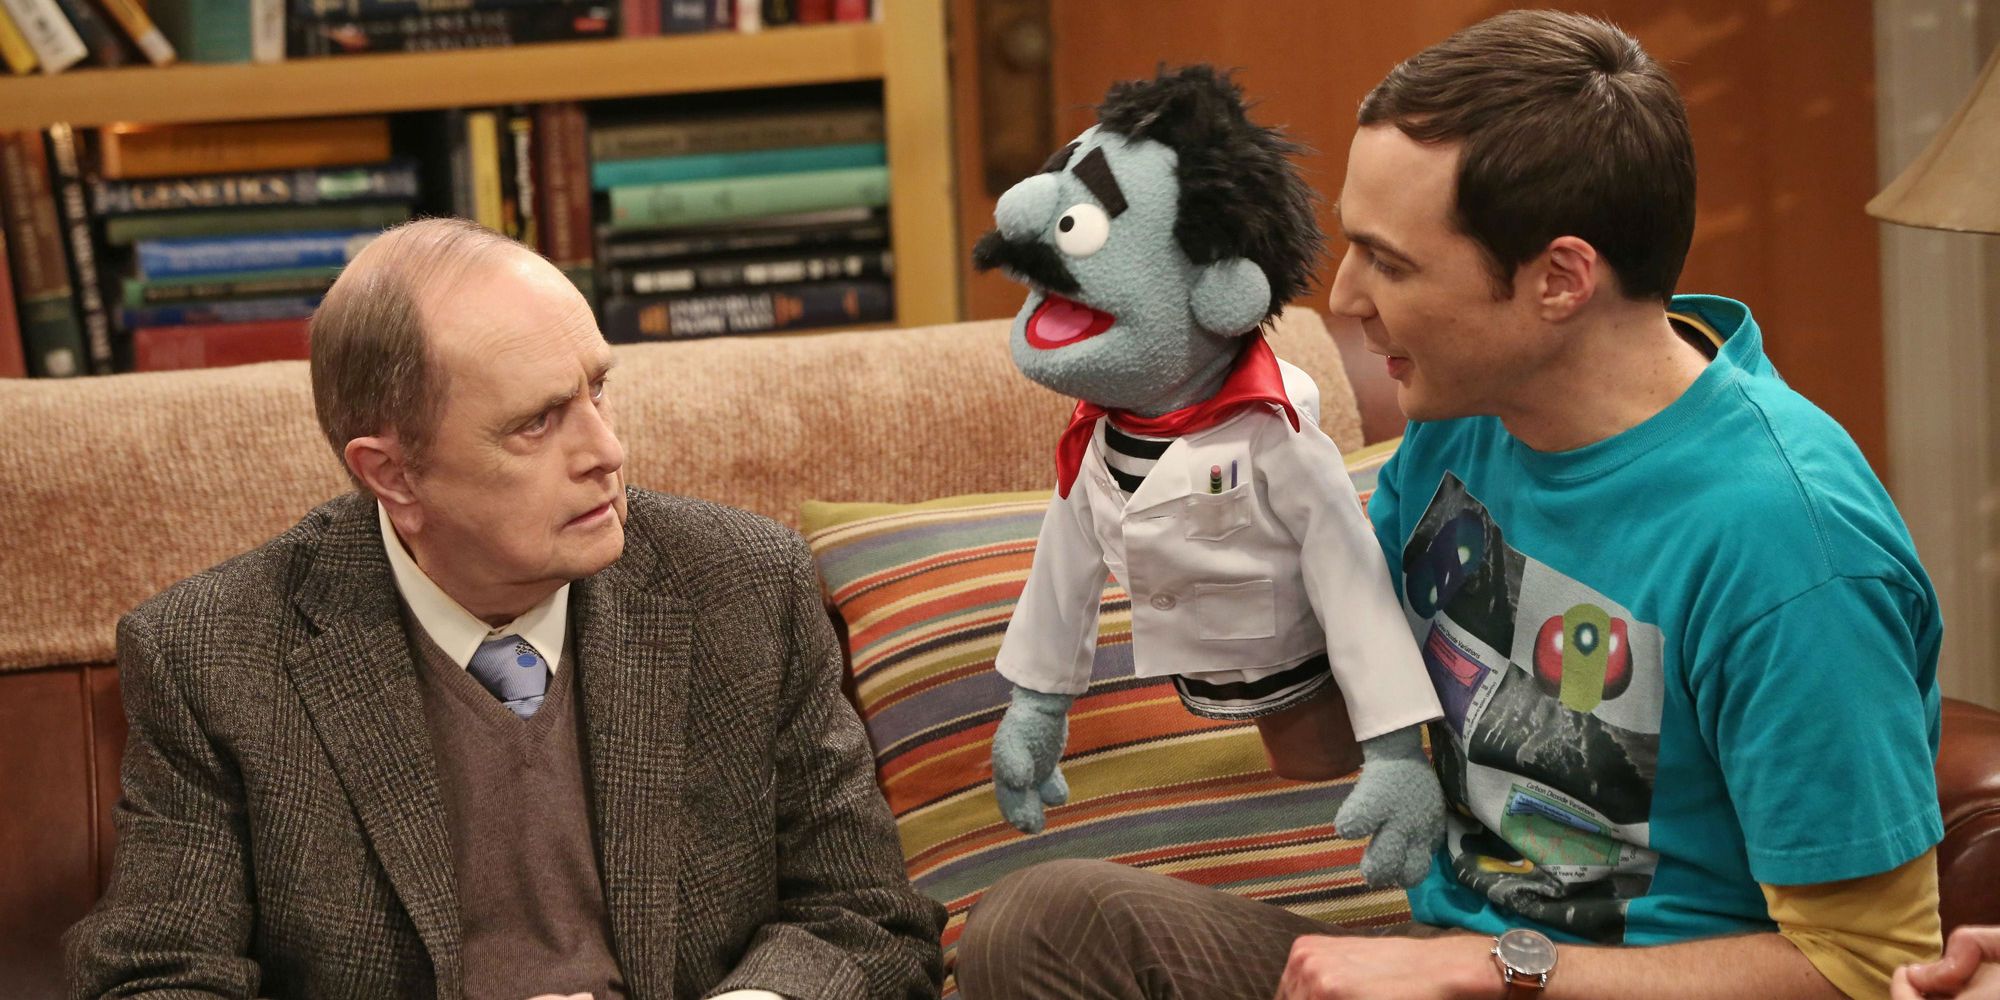 The Big Bang Theory - Bob Newhart as Professor Proton with Sheldon